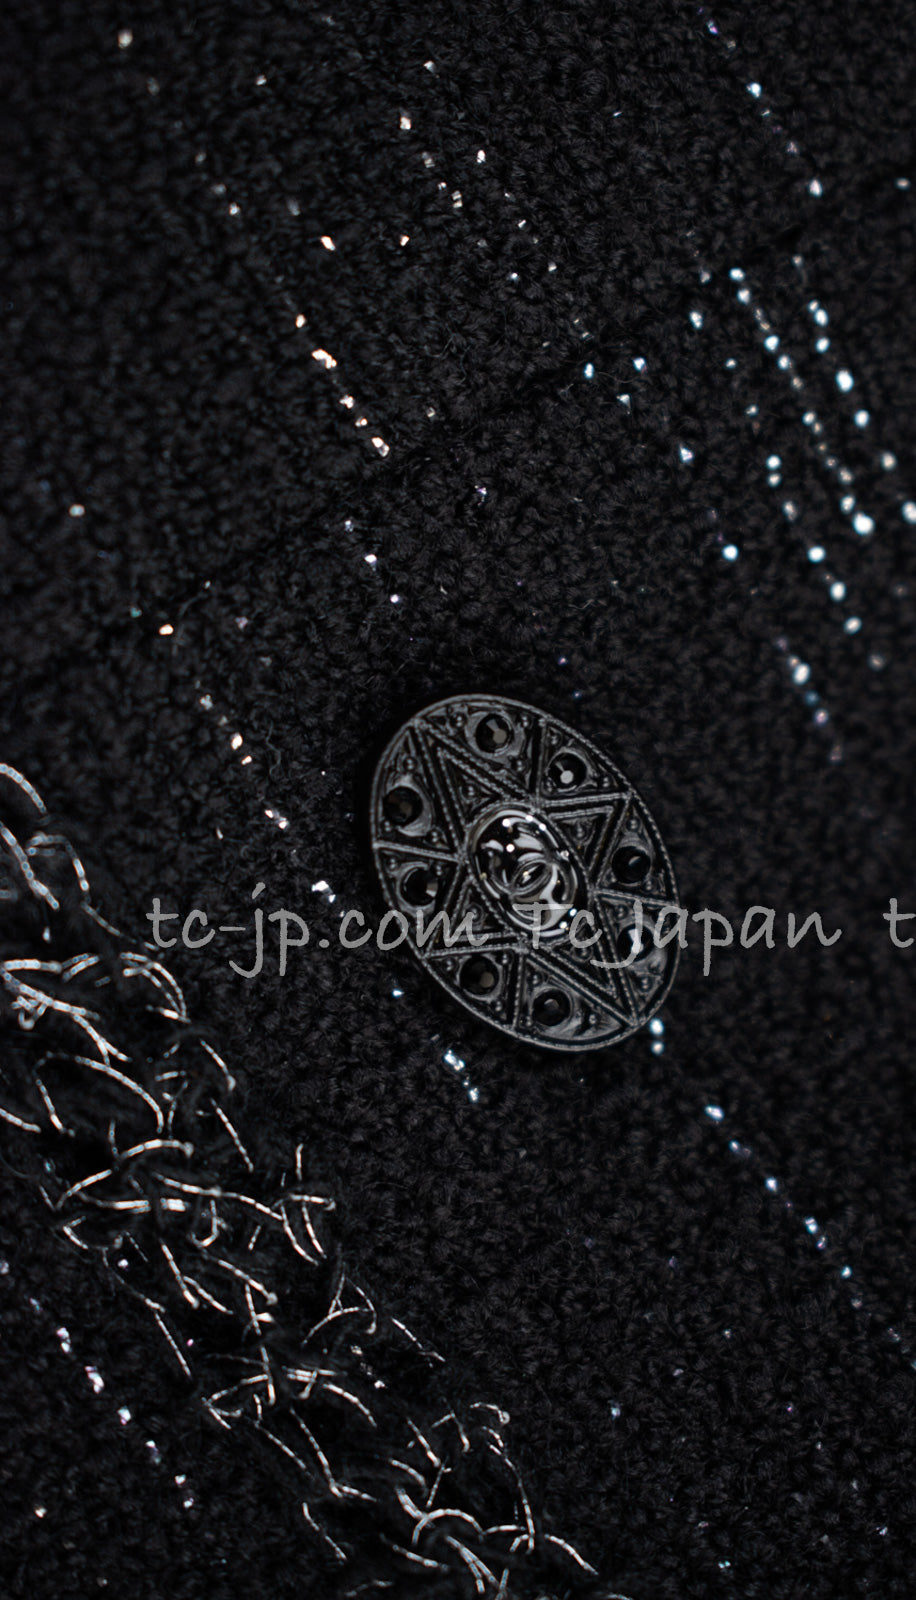 CHANEL 09A Black Metallic Silver Wool Jacket Dress 36 シャネル ブラック・メタリック・ウール・ジャケット・ワンピース 即発